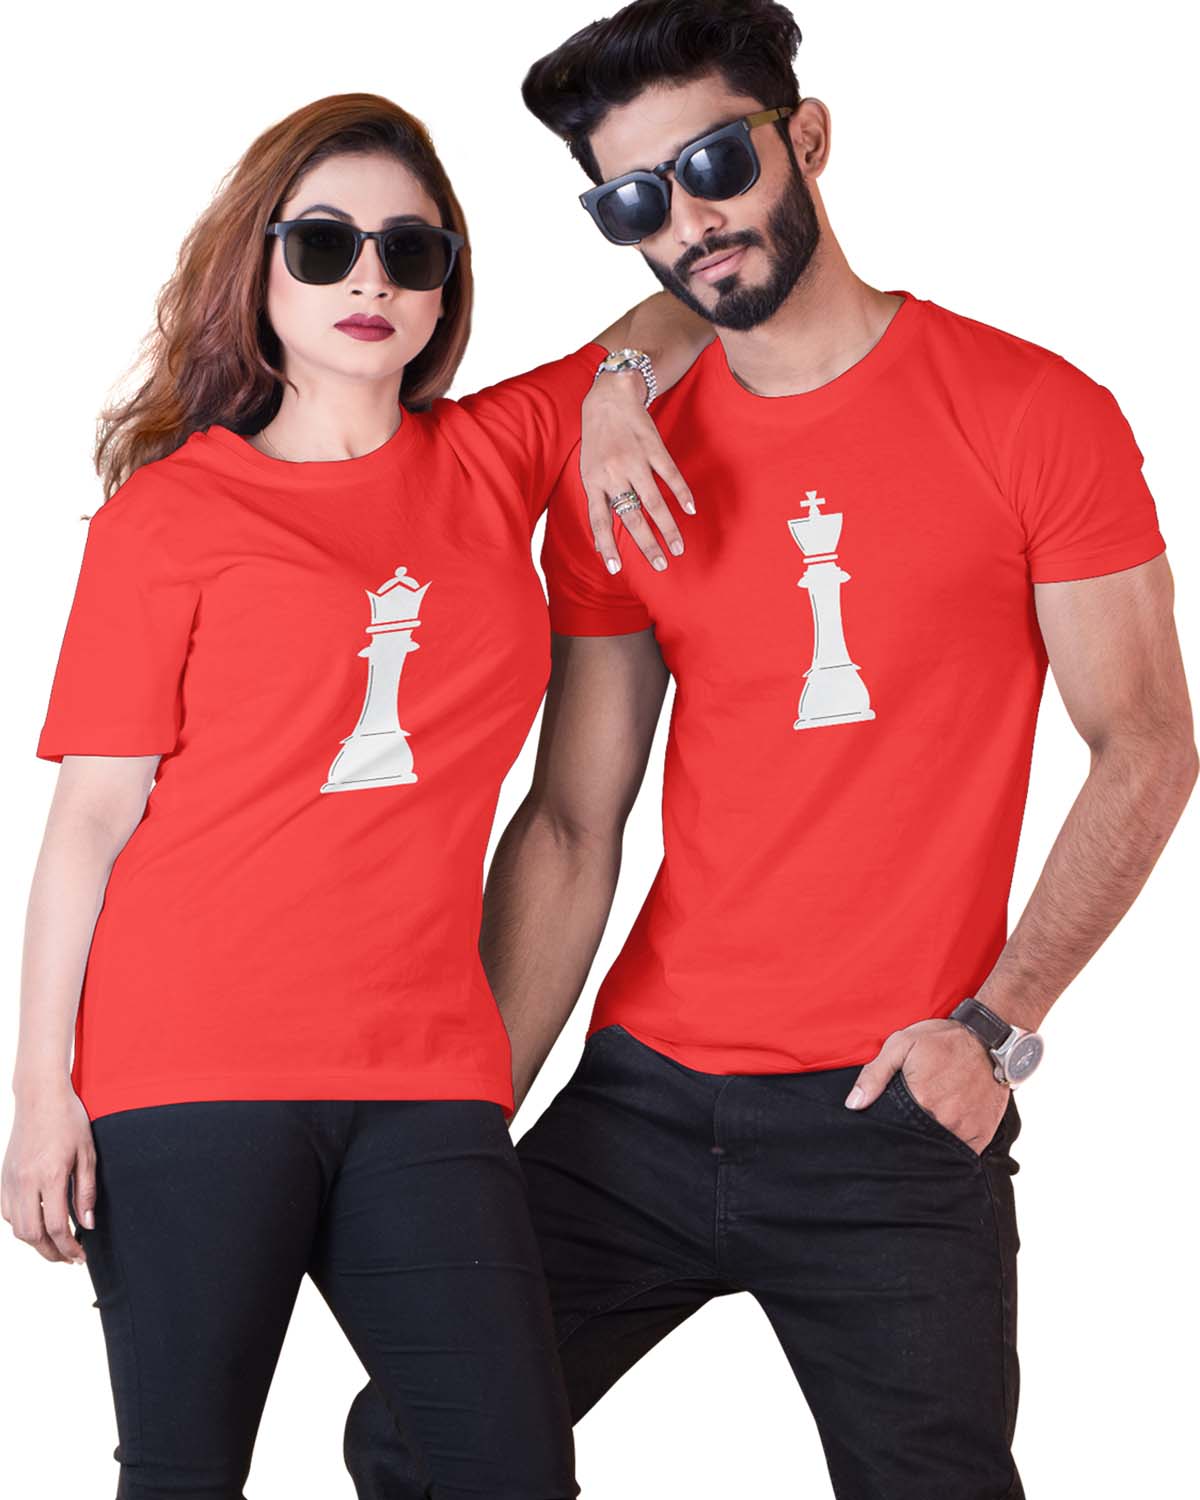 King & Queen Couple T-Shirt